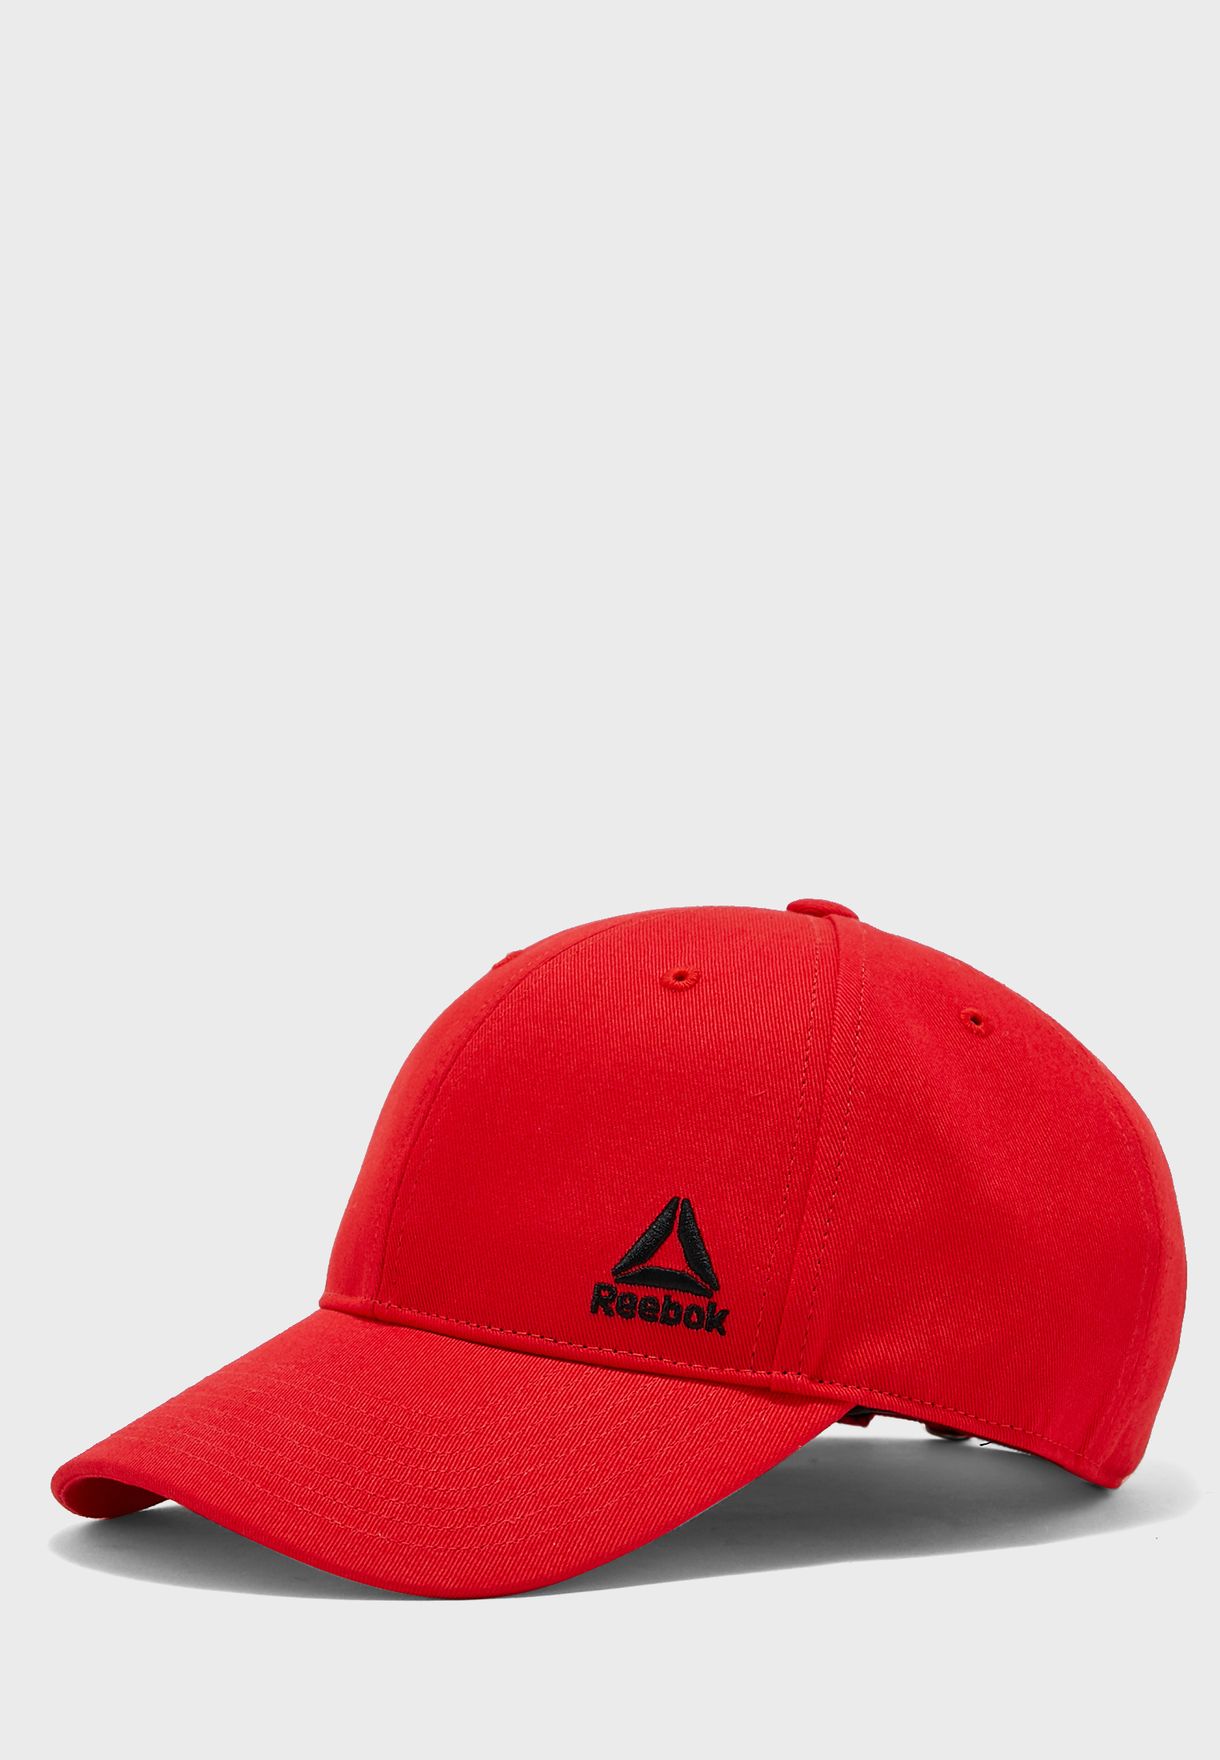 reebok red cap